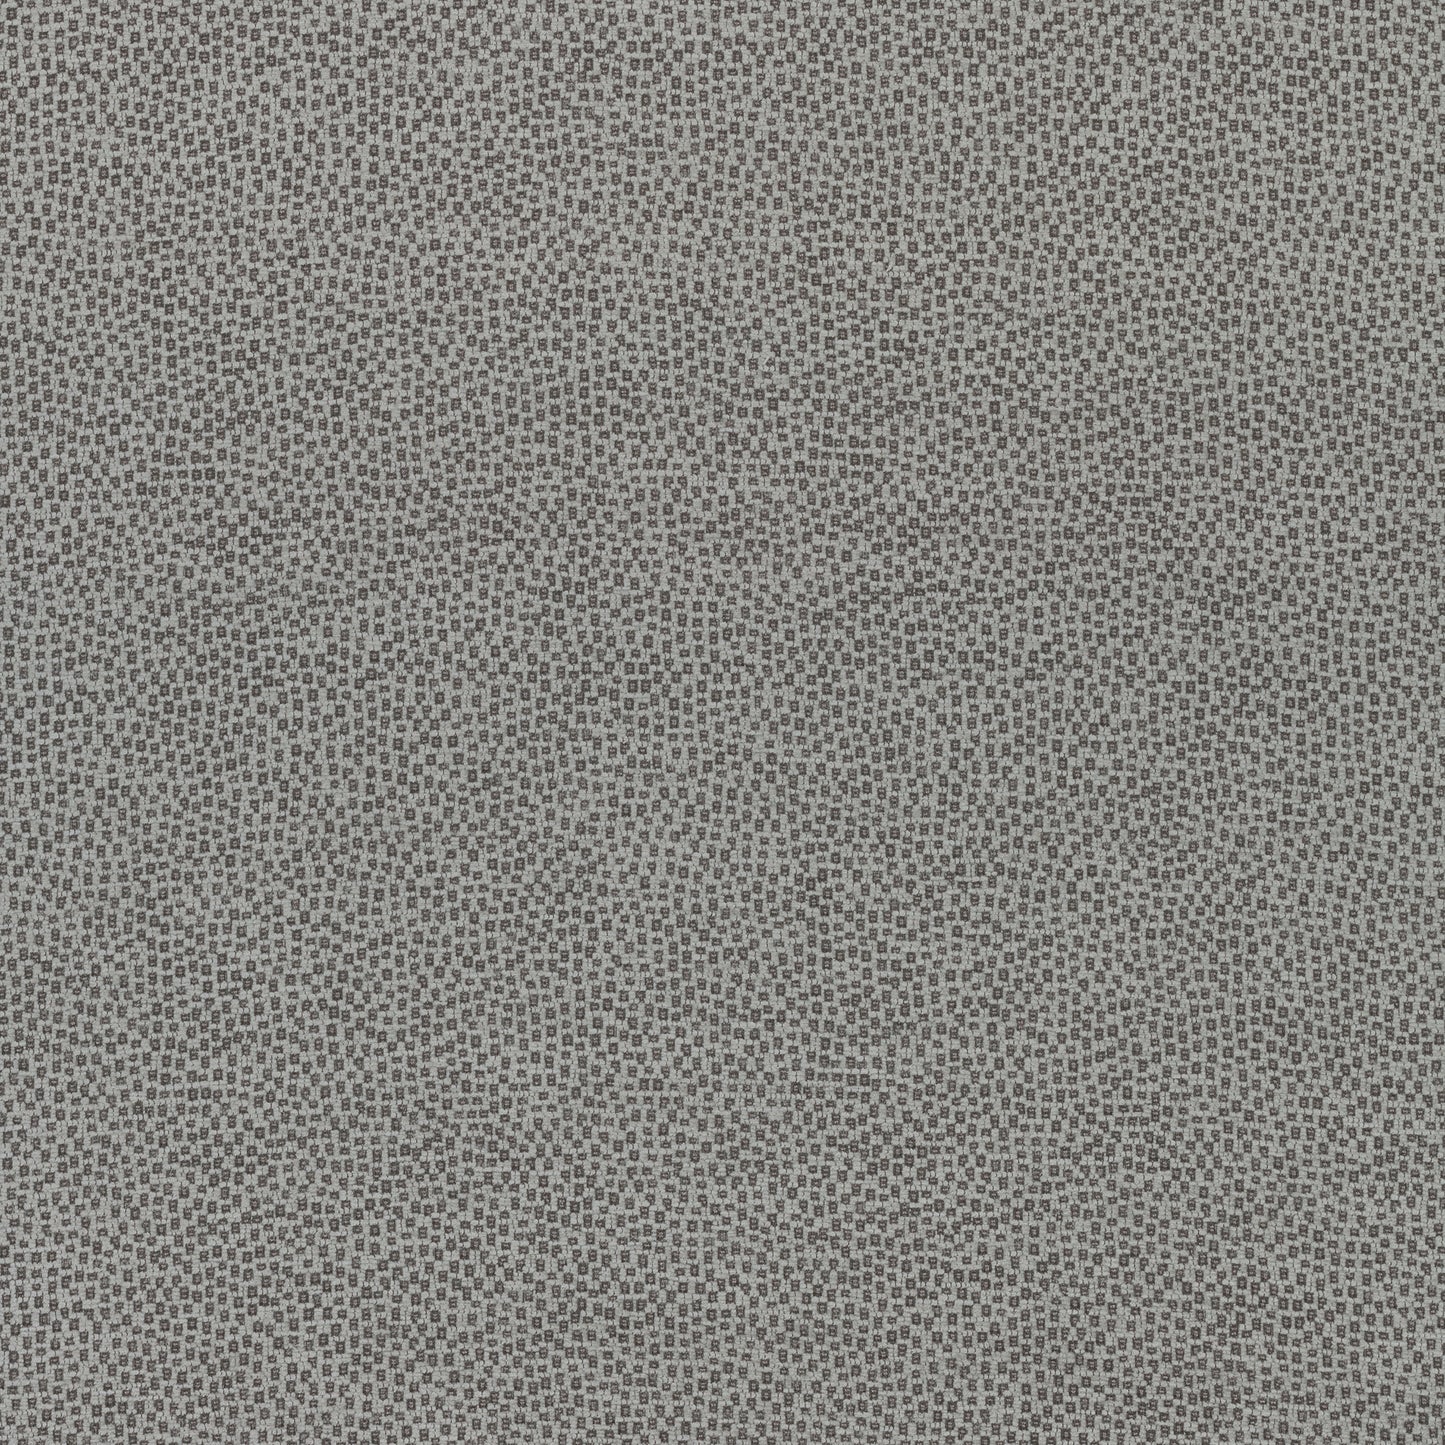 Purchase Thibaut Fabric SKU# W74081 pattern name Nala color Black